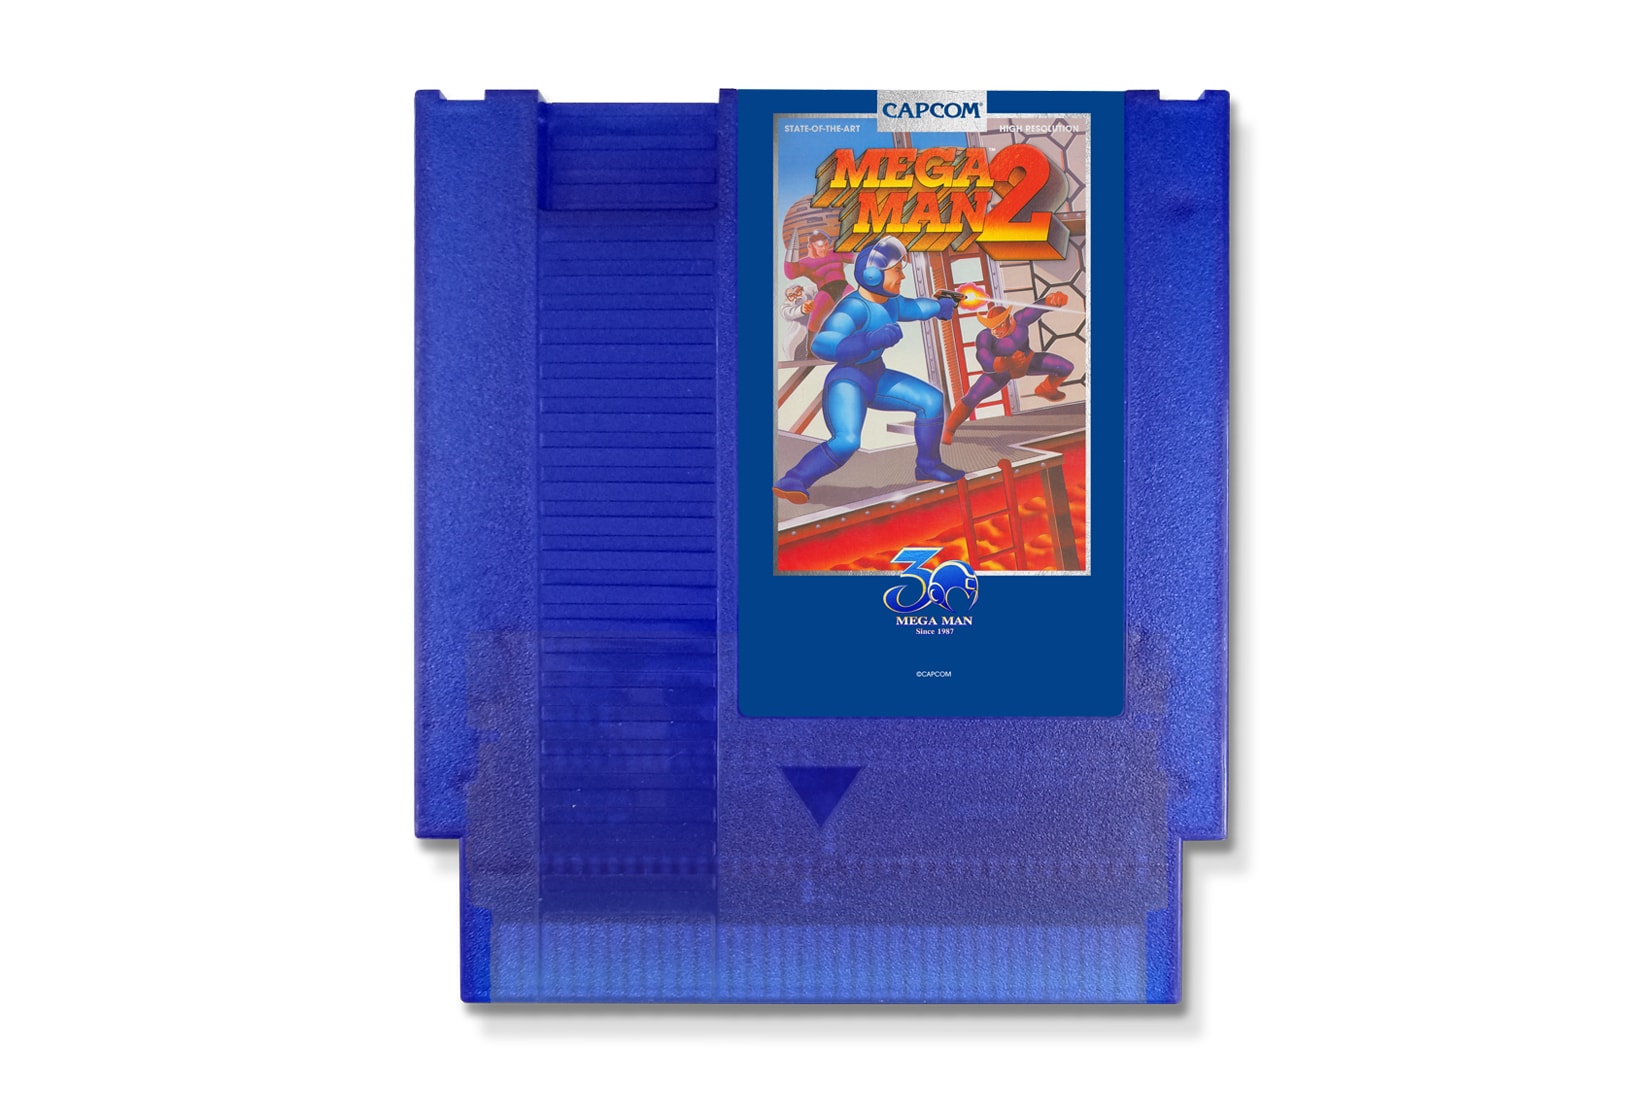 Mega Man 2 X 30th Anniversary iam8bit Cartridges Nintendo NES SNES blue september 2018 release date info drop